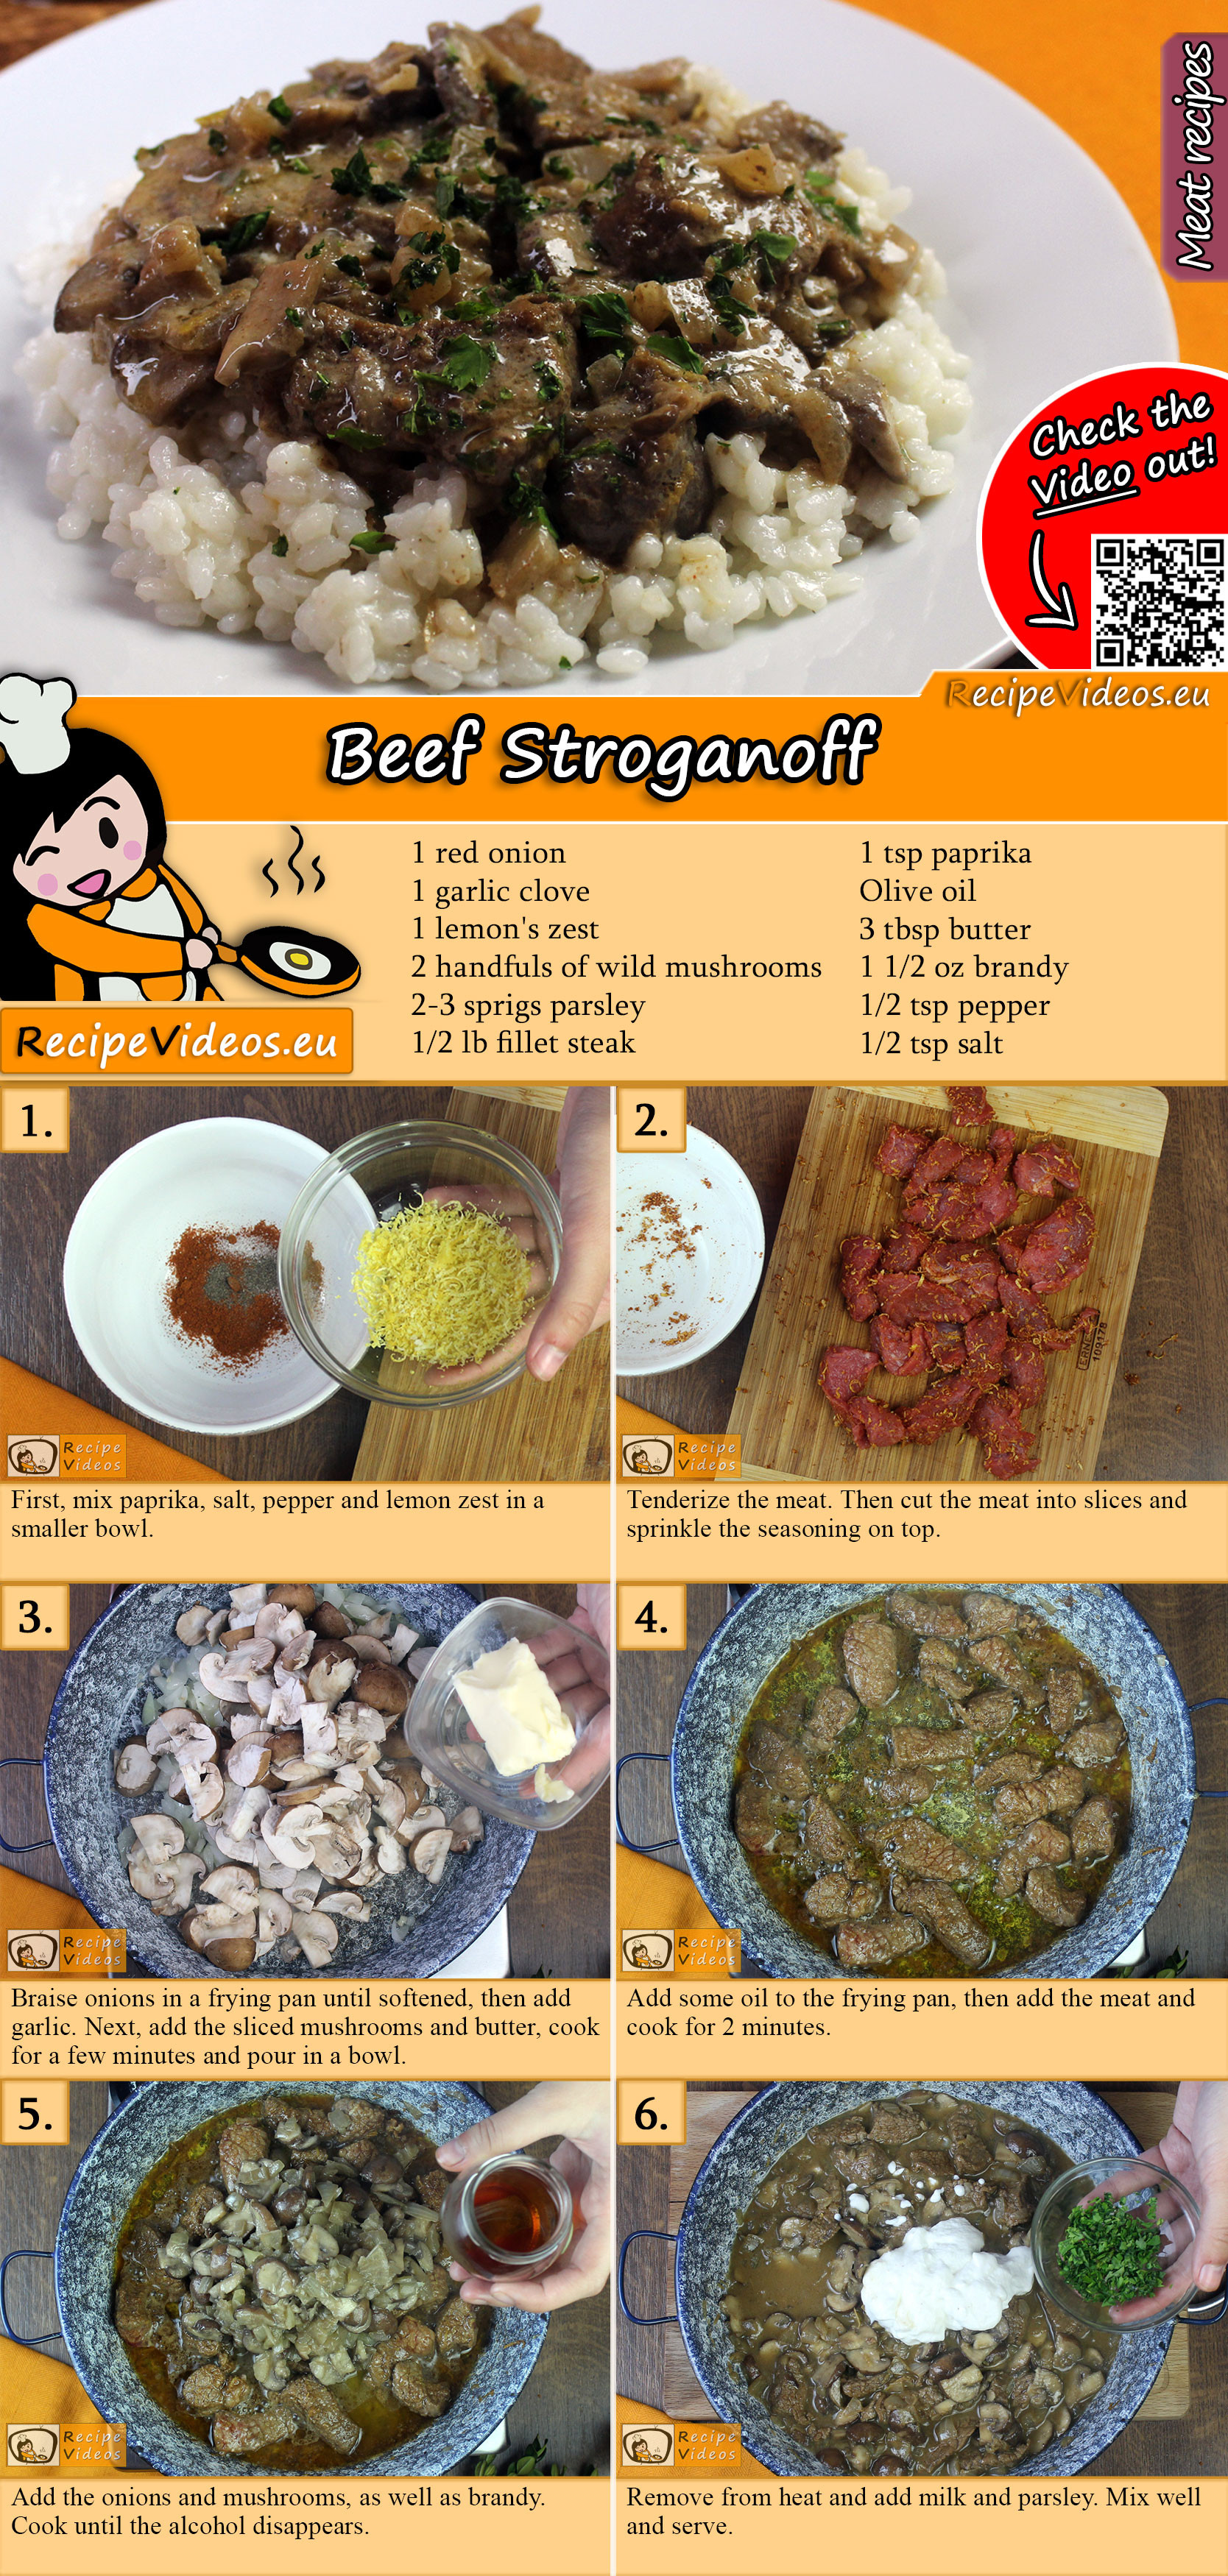 Beef Stroganoff recipe with video